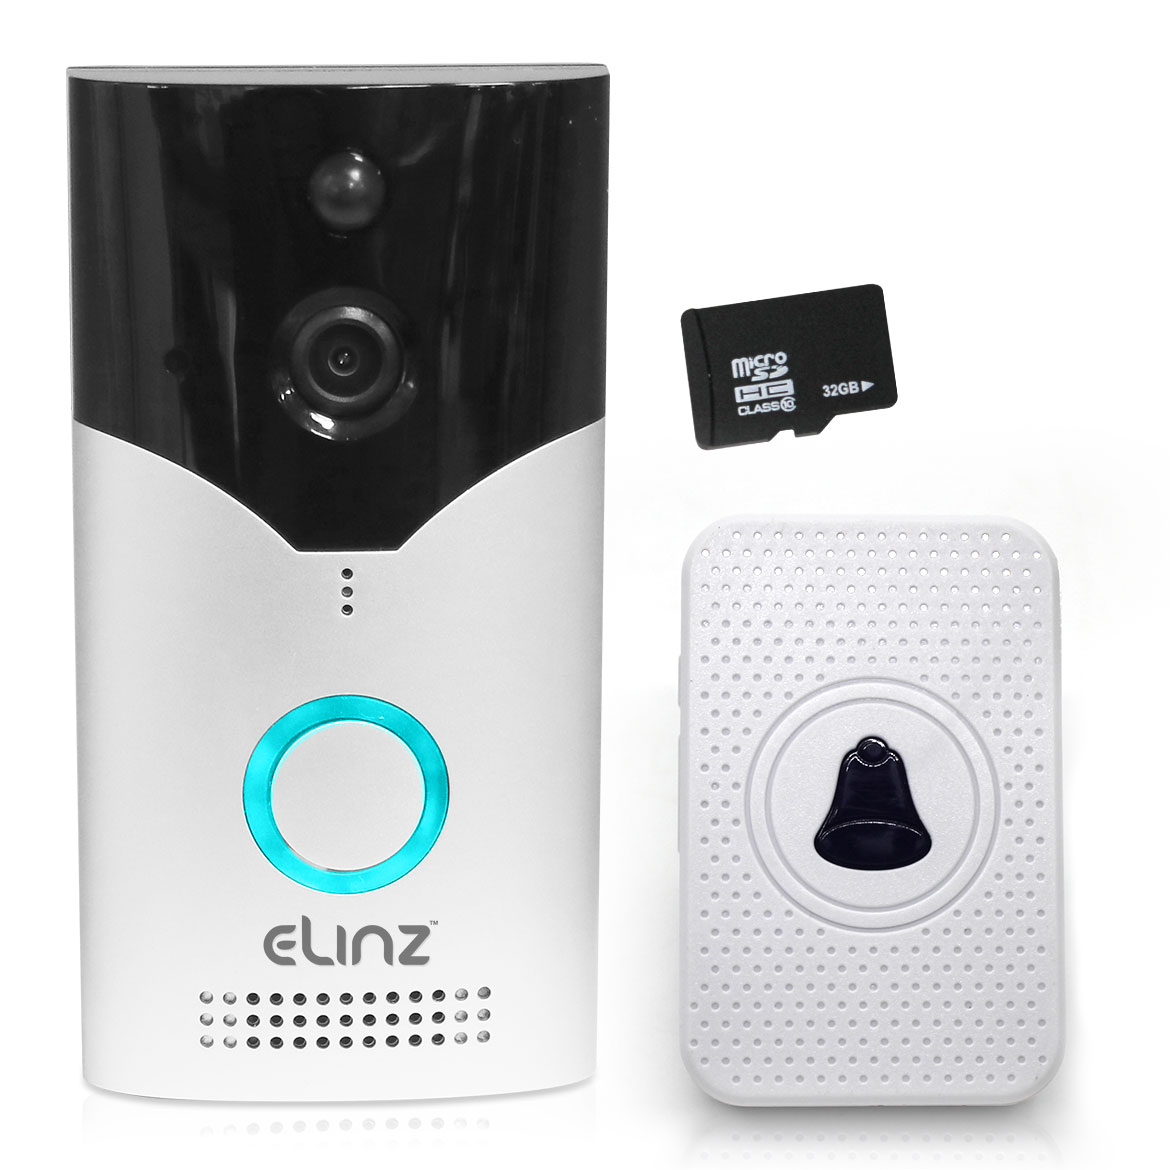 Elinz Wireless WiFi Doorbell Intercom Security Camera HD 1080P Two-Way Talk 32GB